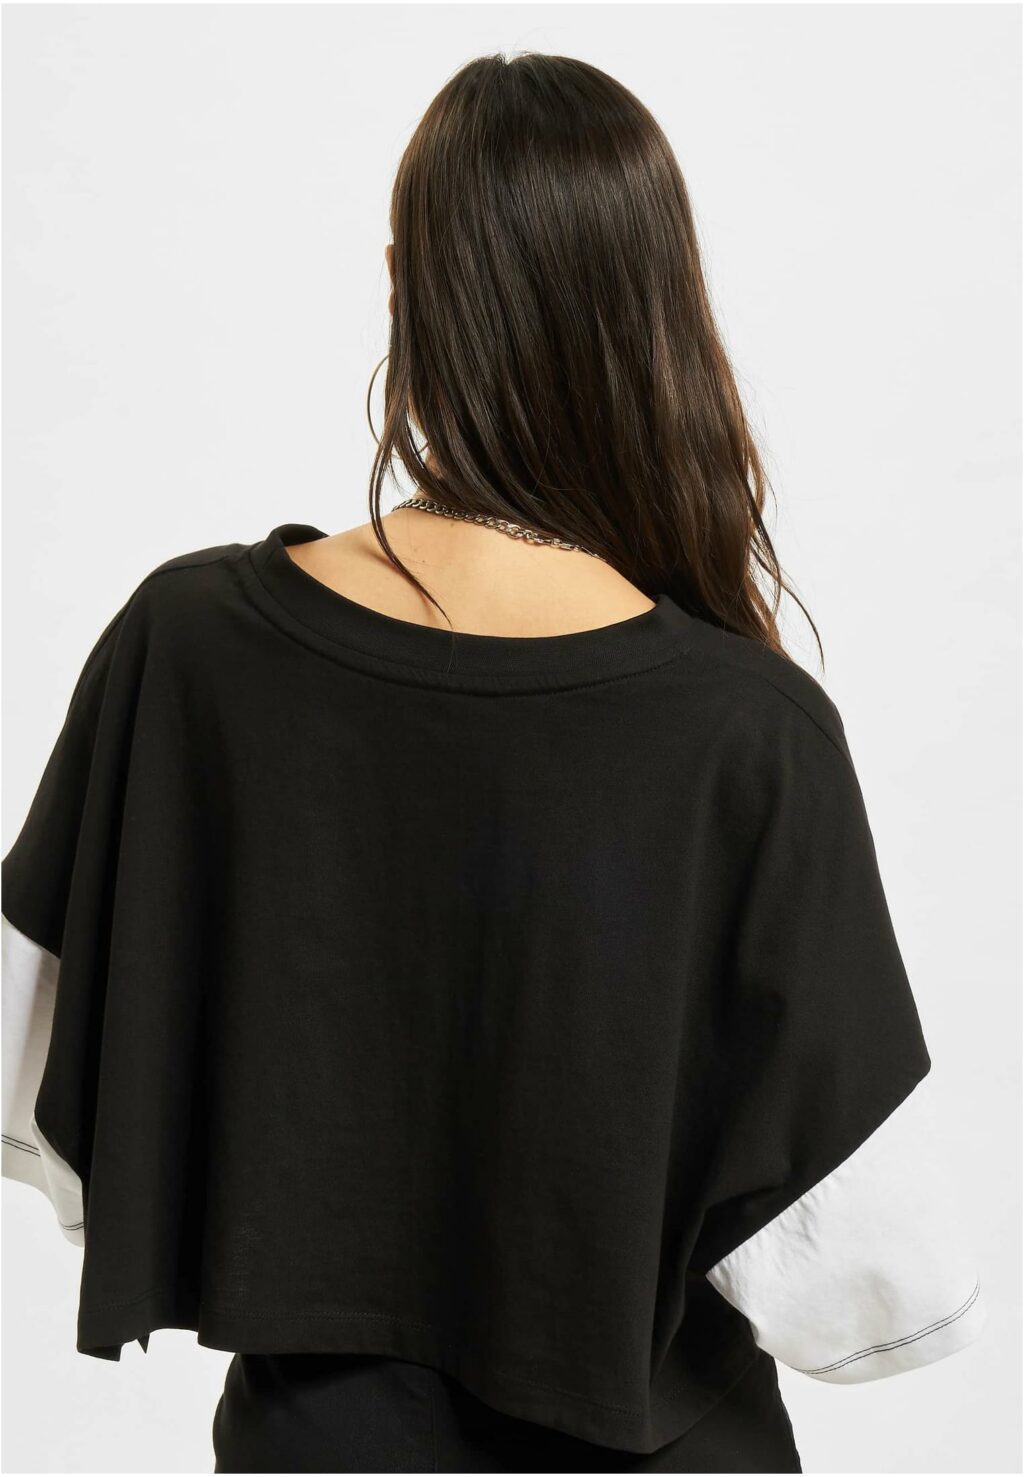 Rocawear Resolution T-Shirt black RWLTS002